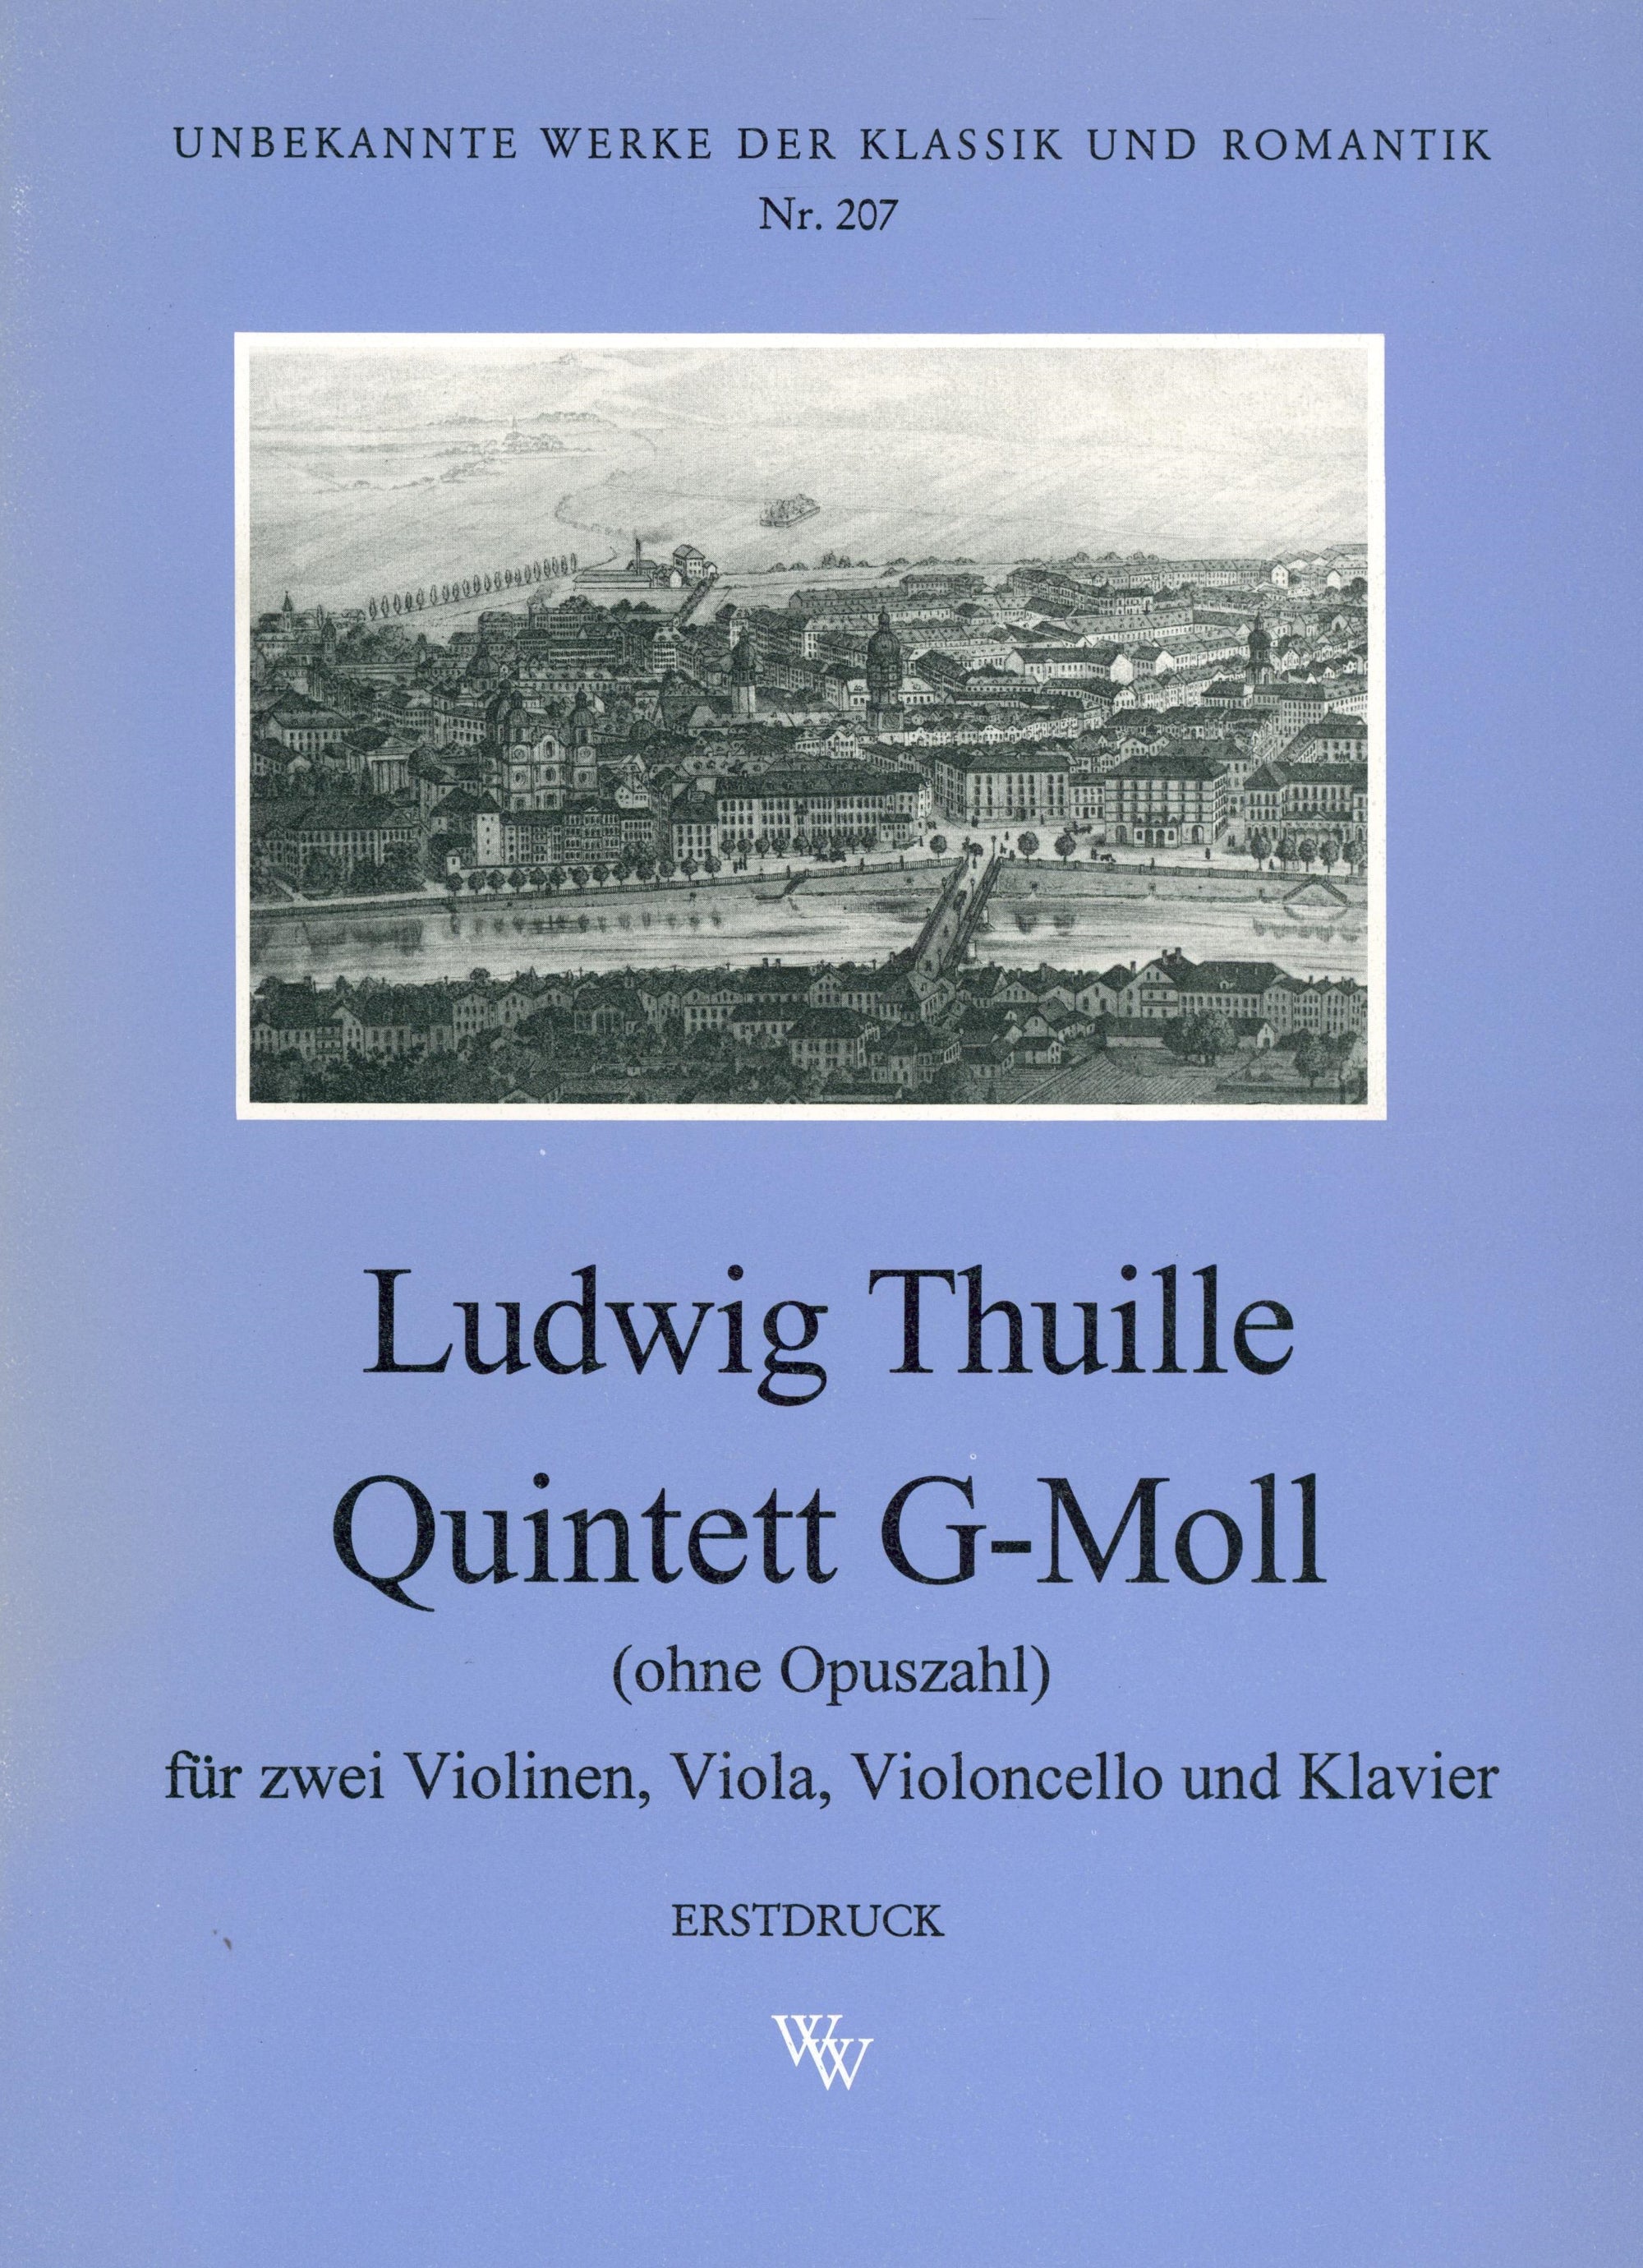 Thuille: Piano Quintet in G Minor